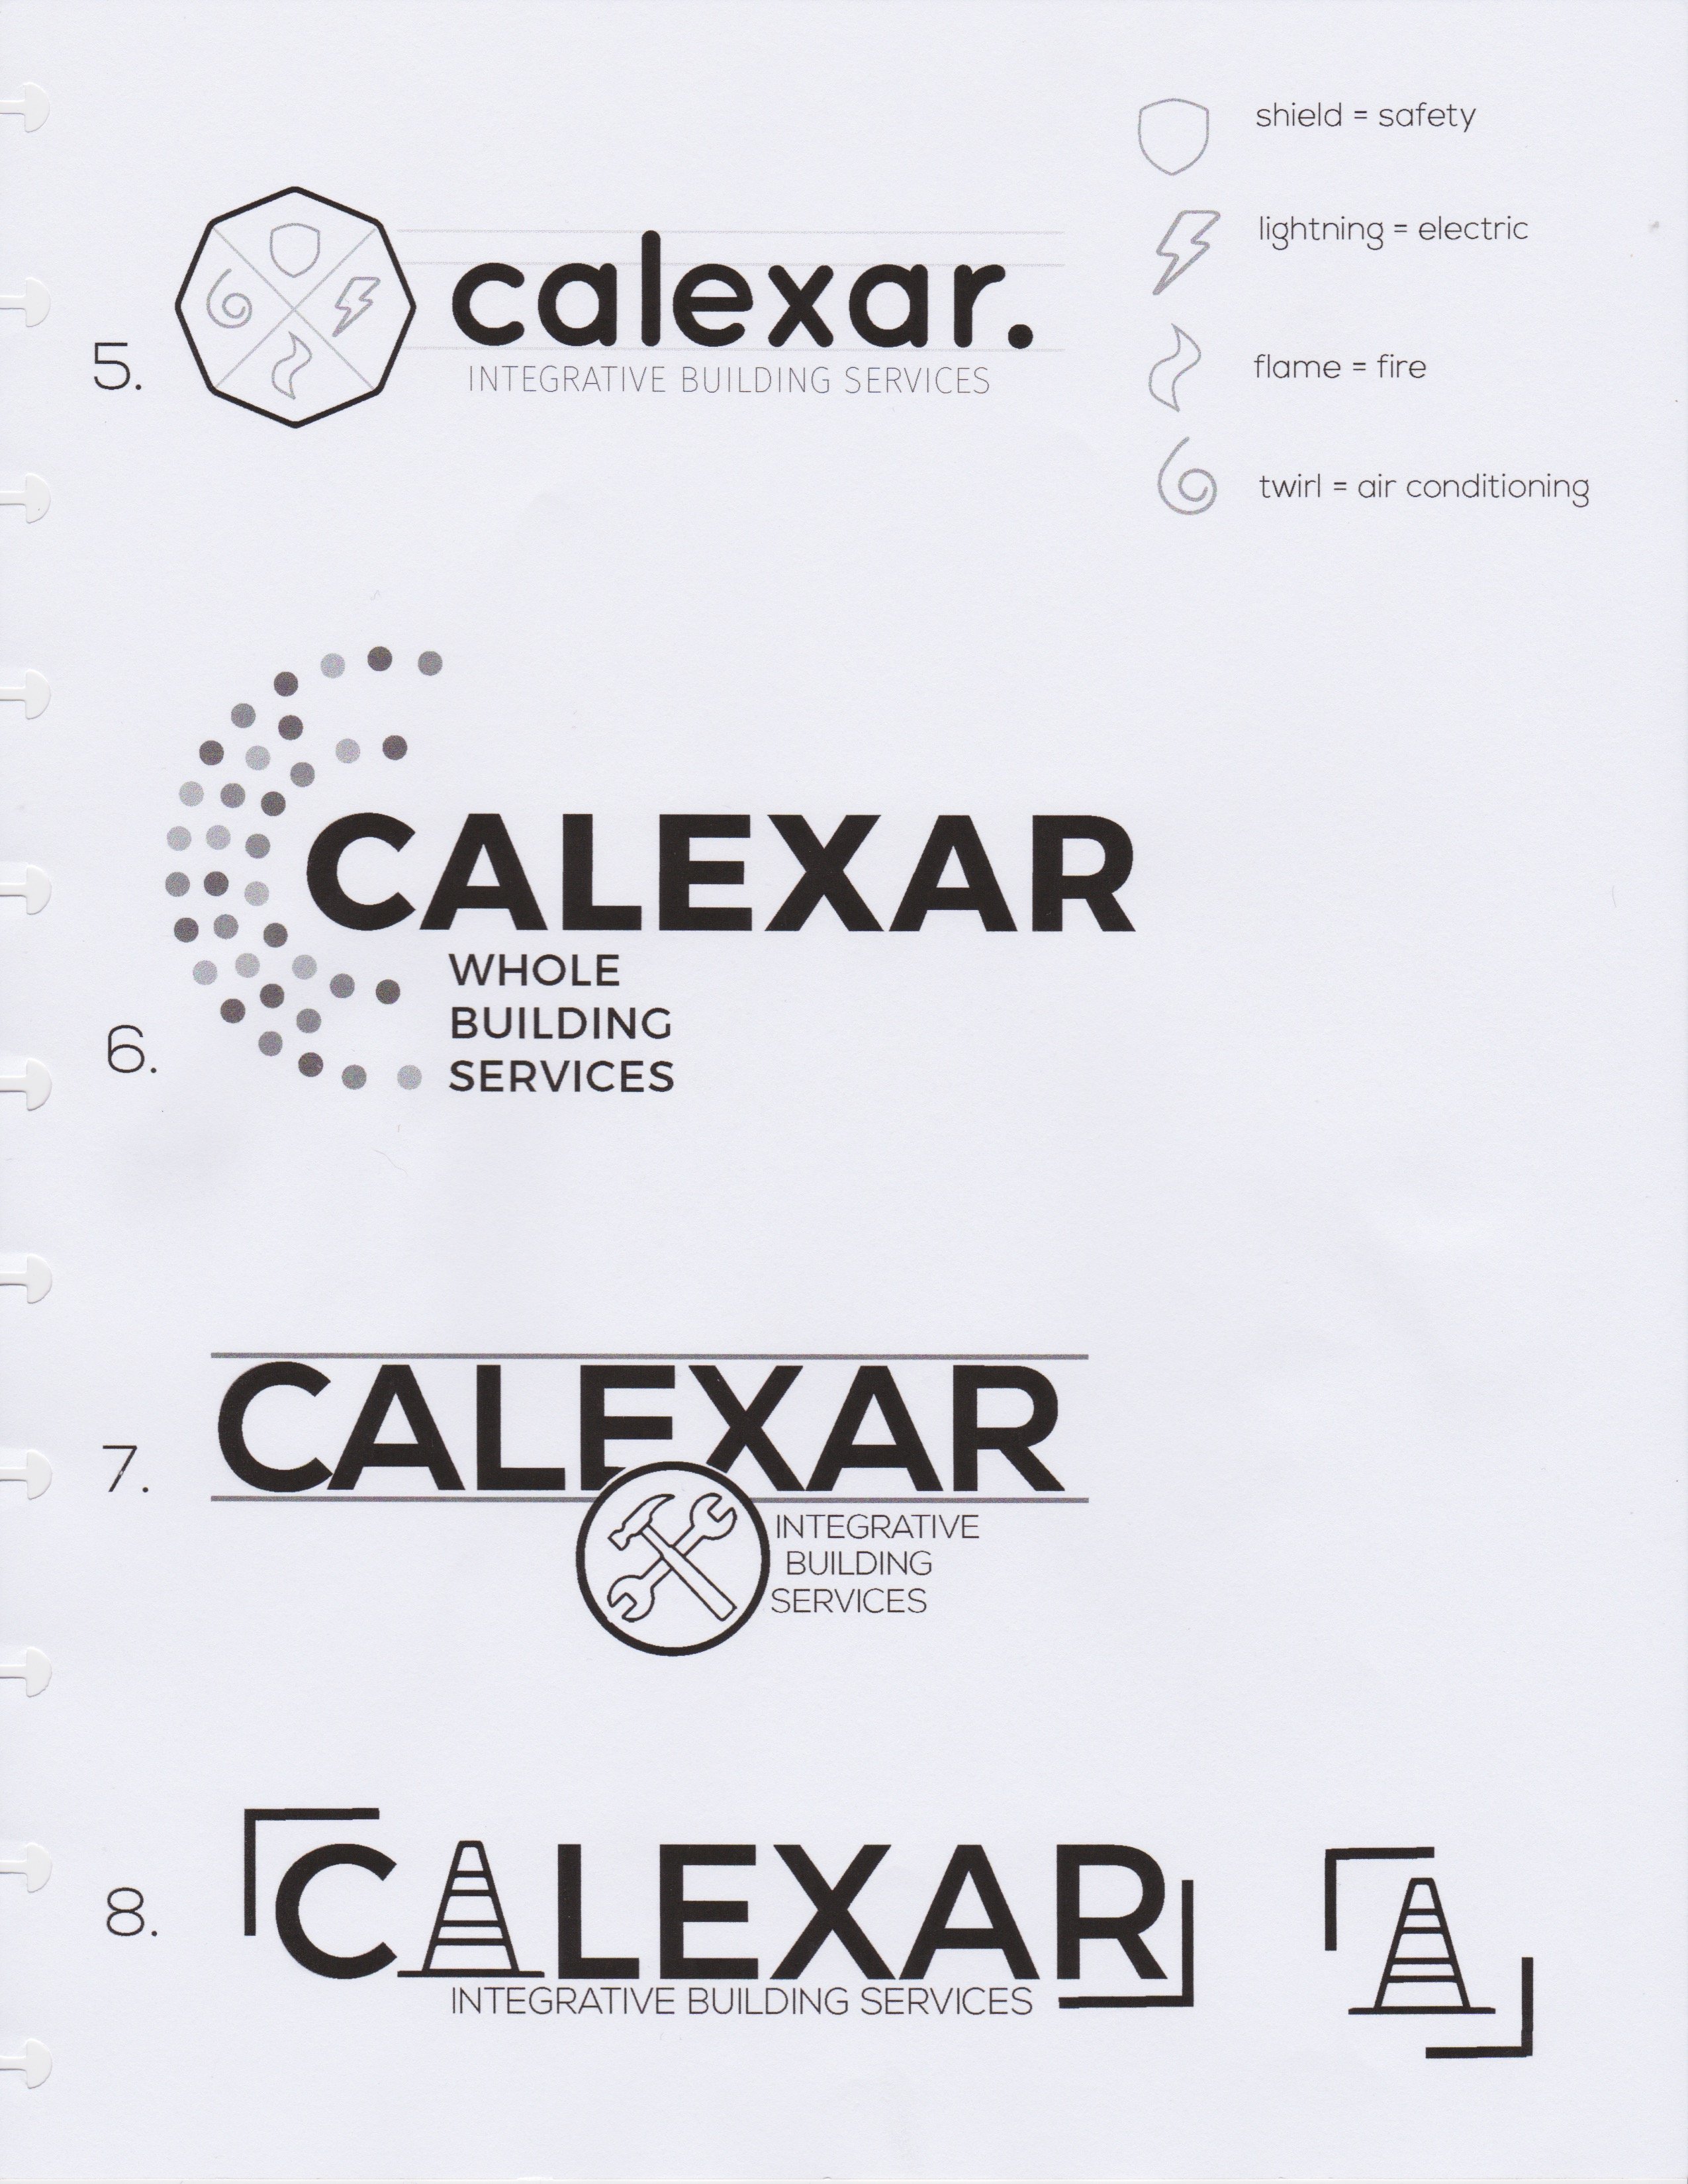 Logo Design - Converting to Digital